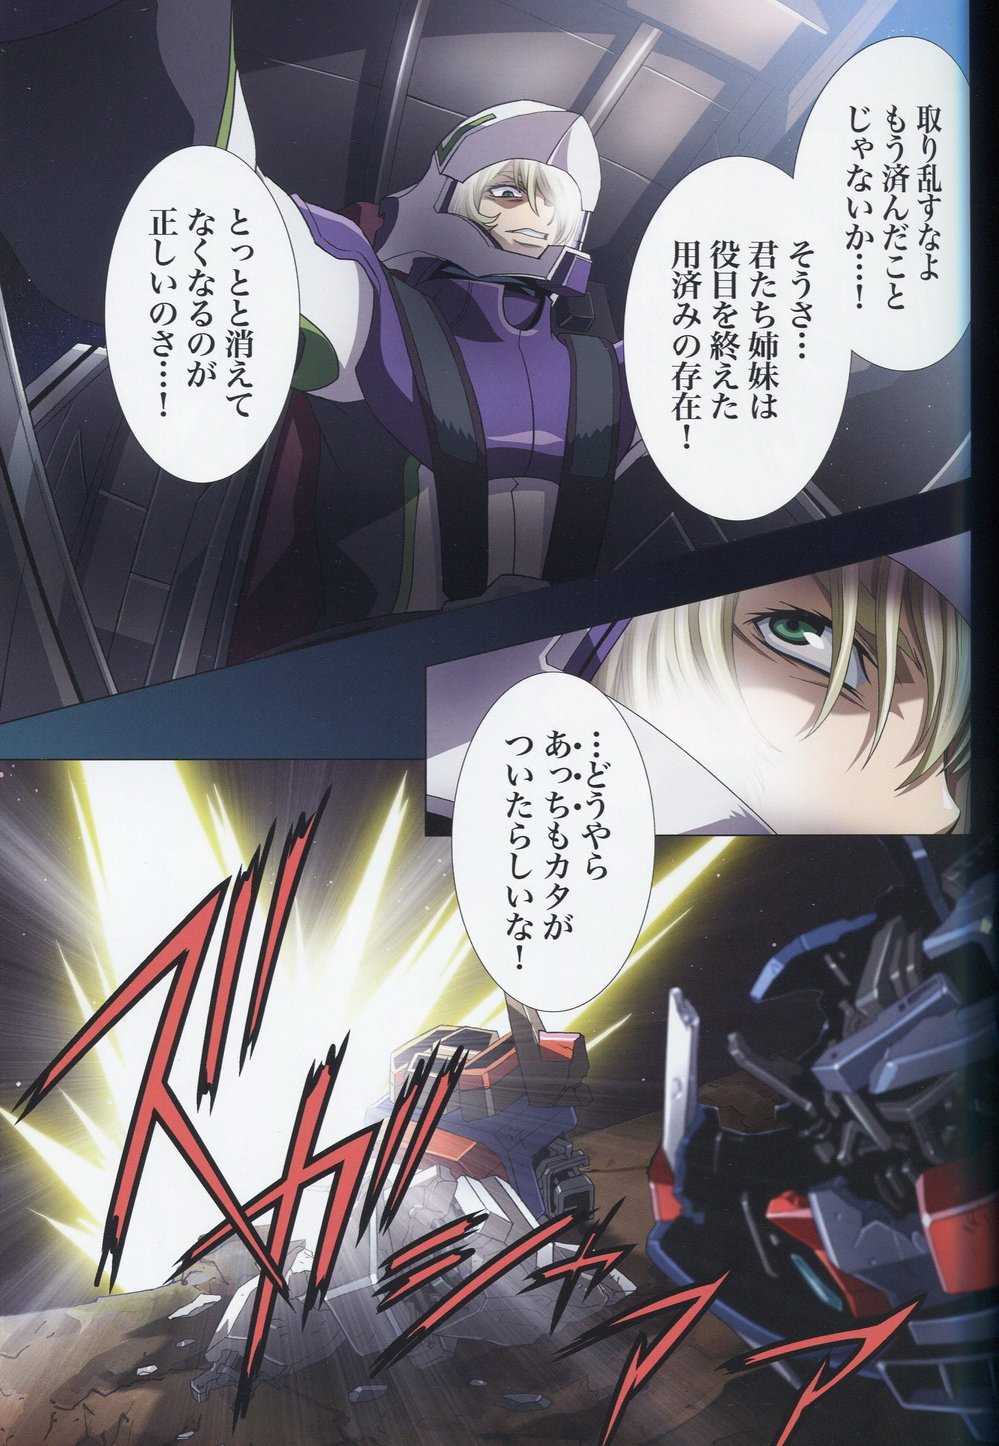 [HenReiKai] - Gundam SEED - Another Century D.E. 7 Destiny Epilogue/Epiroge 